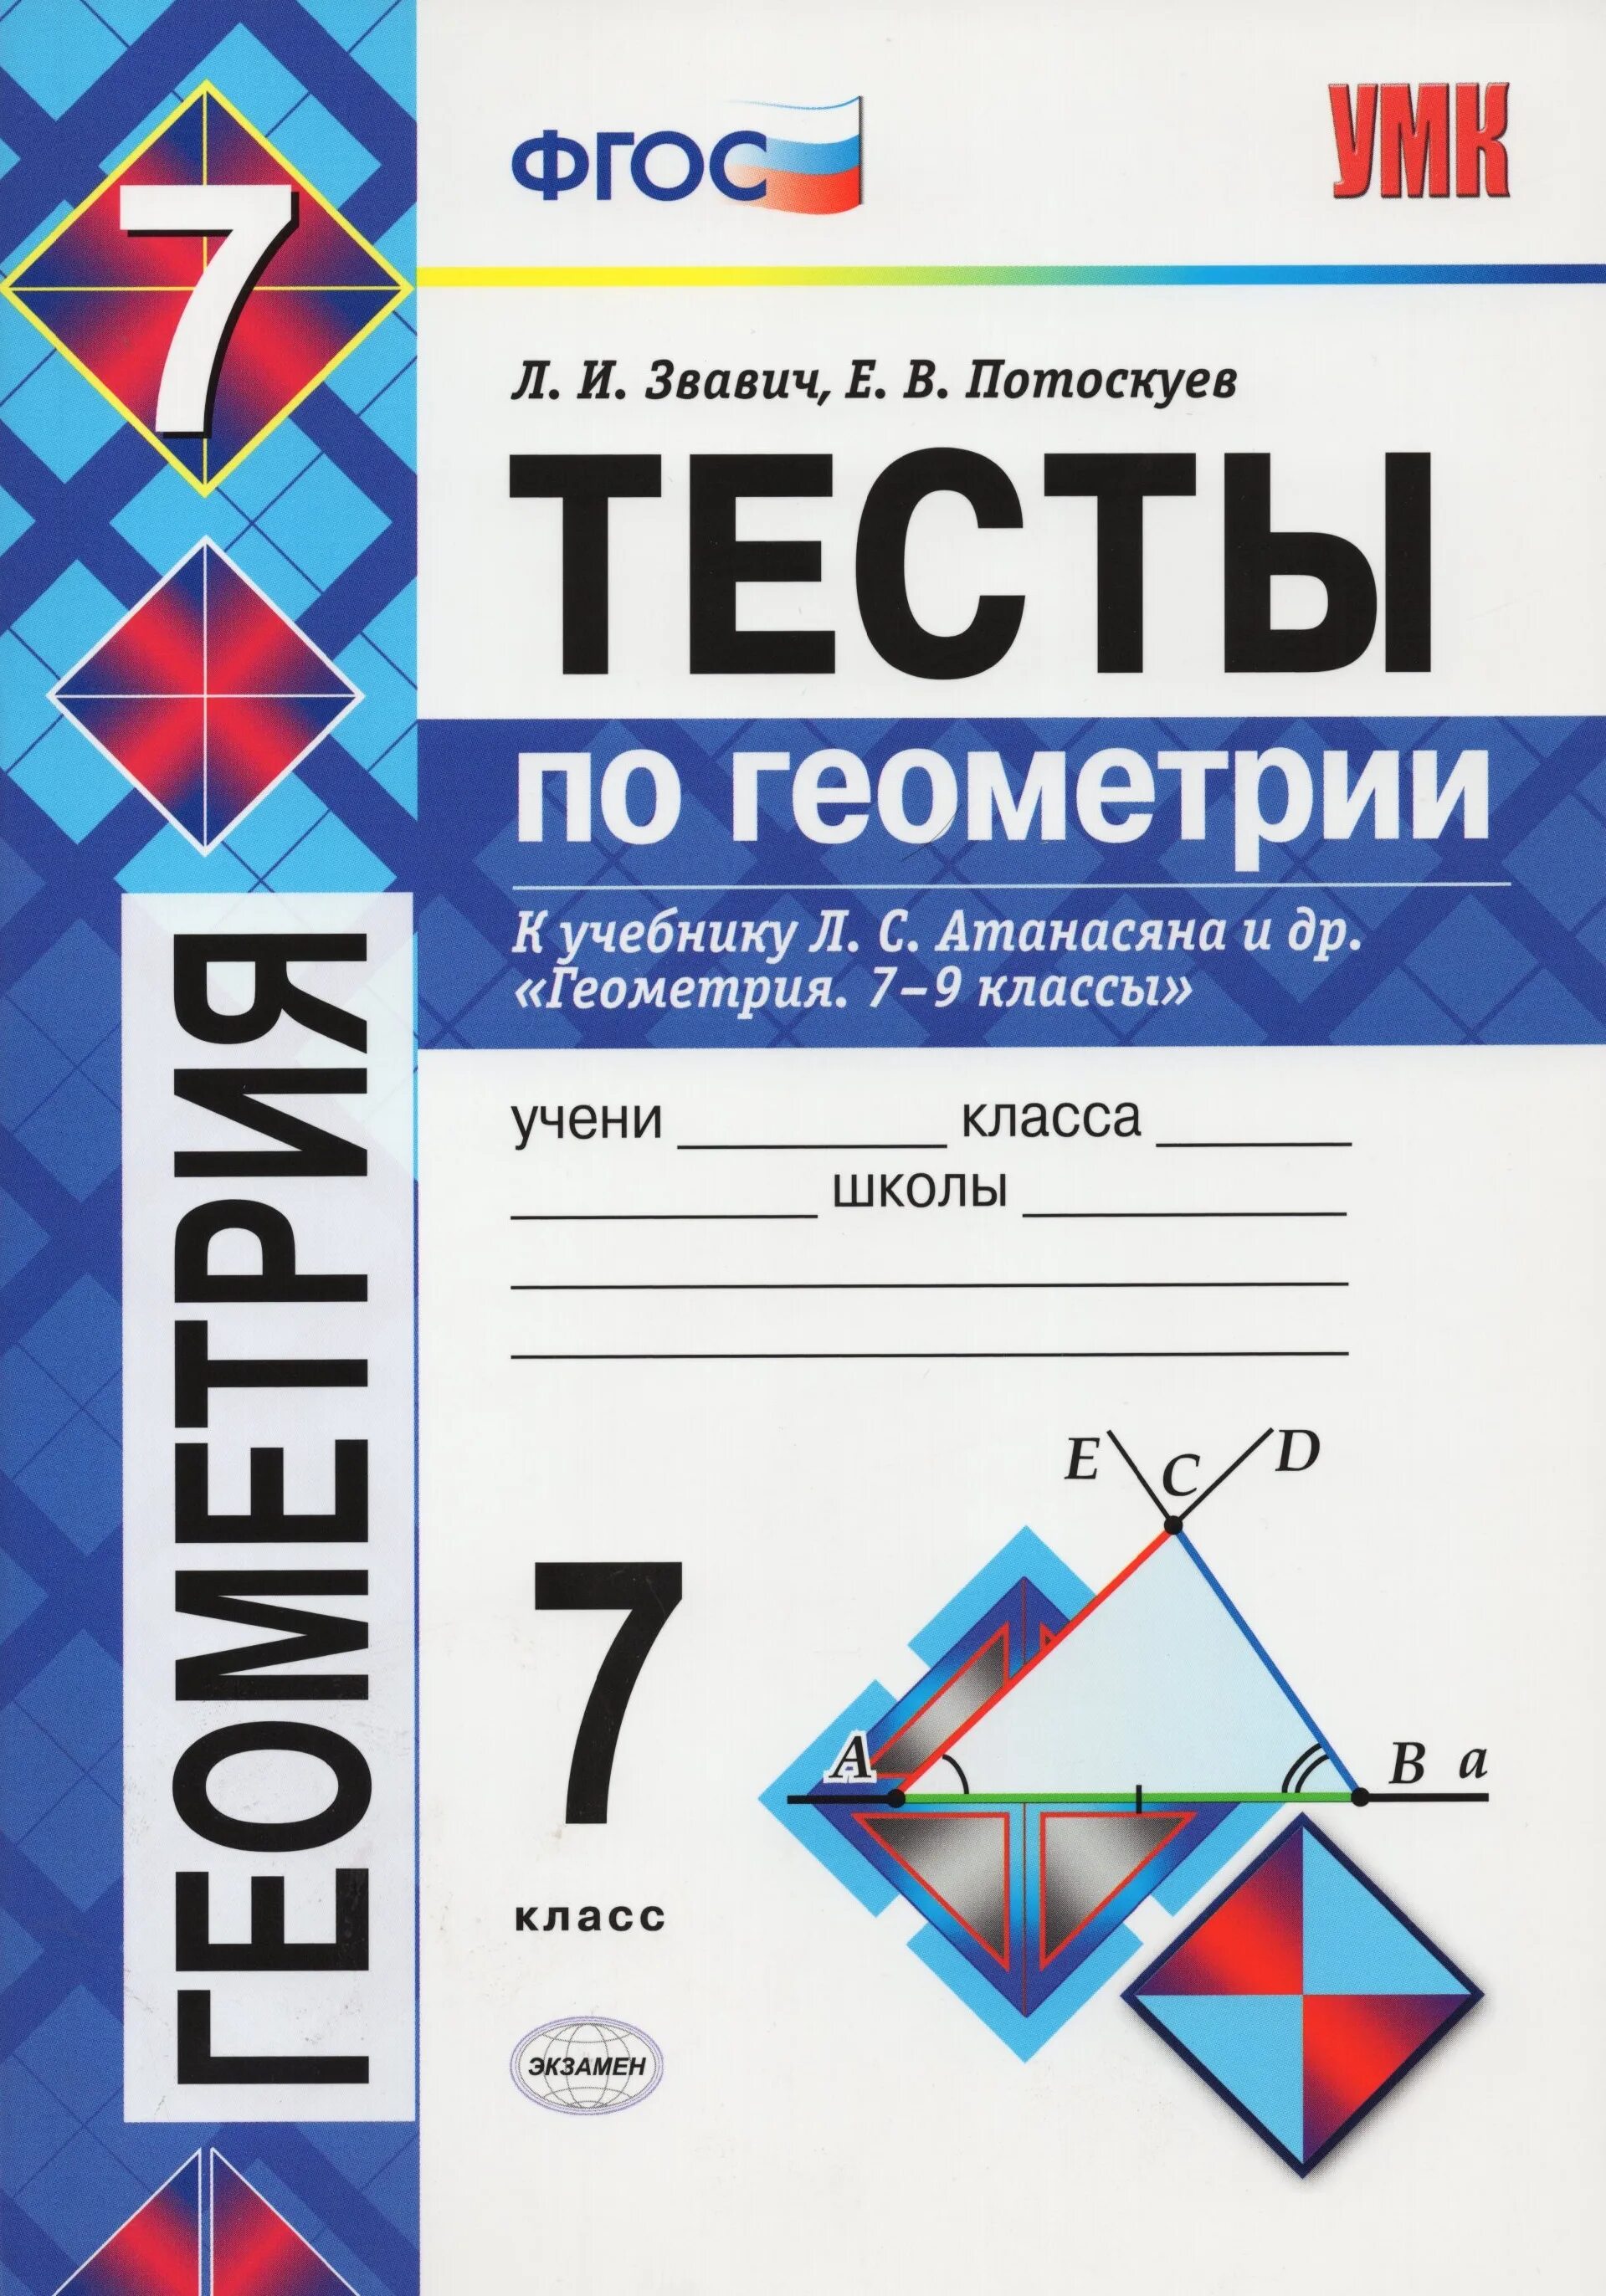 Геометрия 7 класс россия. Геометрия 7-9 класс тесты Атанасян ФГОС. Книжка с тестами геометрия 7-9 класс Атанасян. Тесты по геометрии 7 класс Атанасян. Тесты к Атанасяну геометрия.